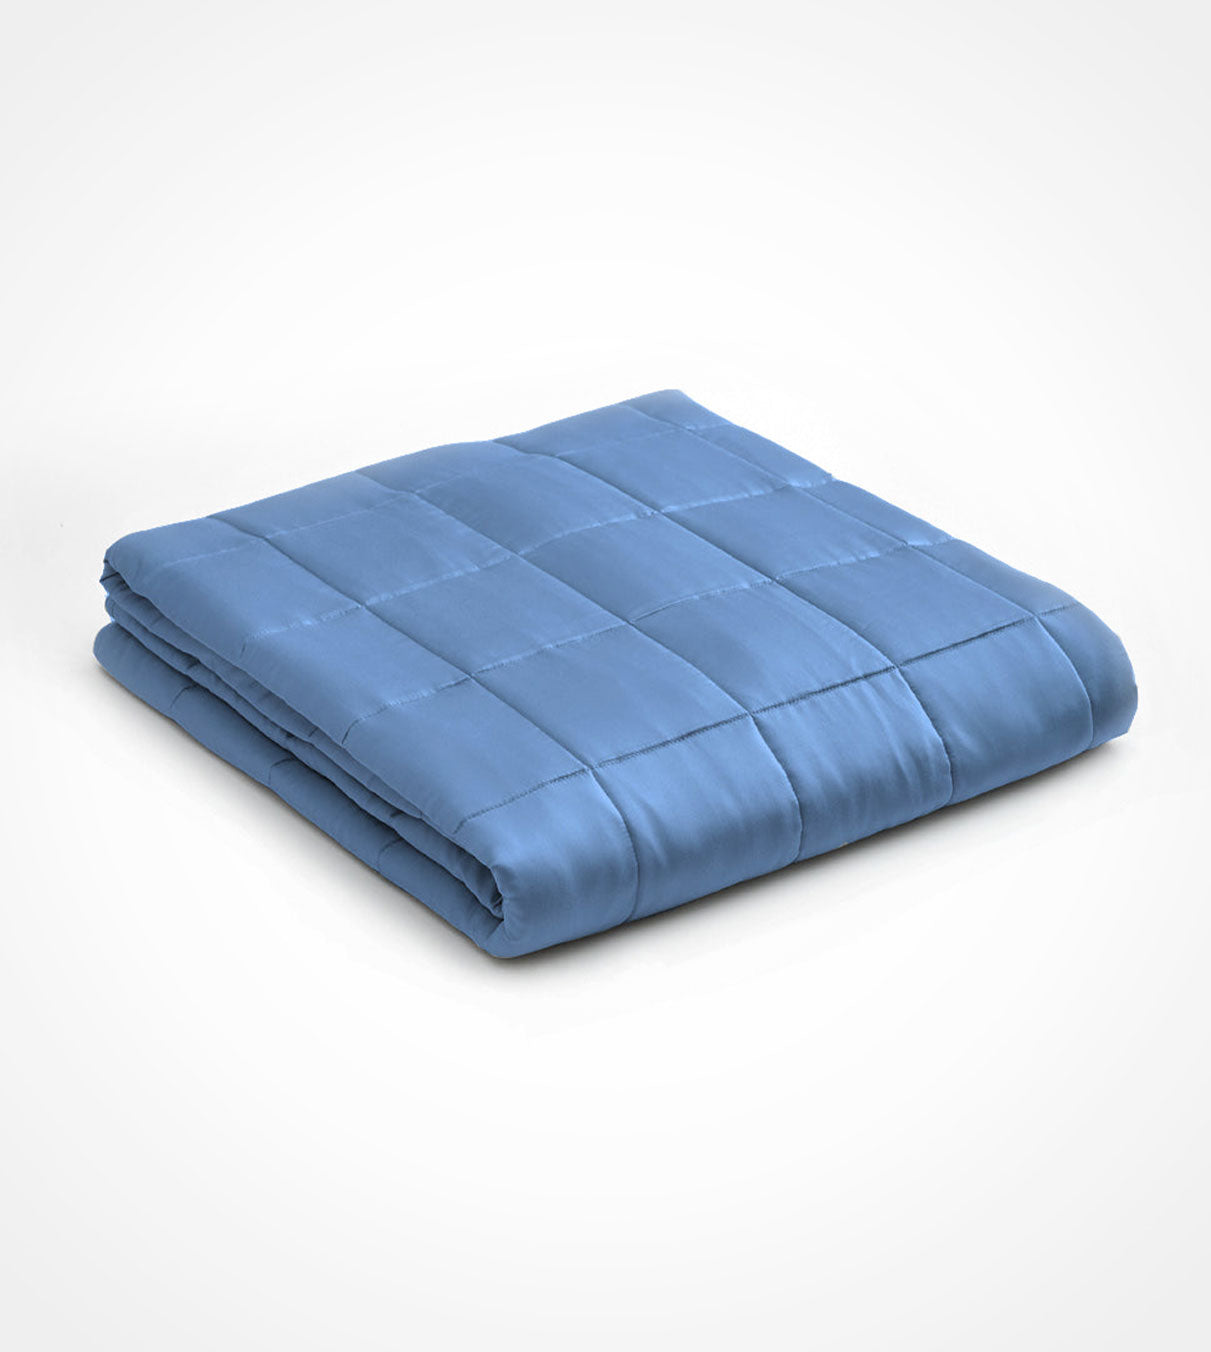 Product: Kids Original Cooling Weighted Blanket | Color: Ocean Blue